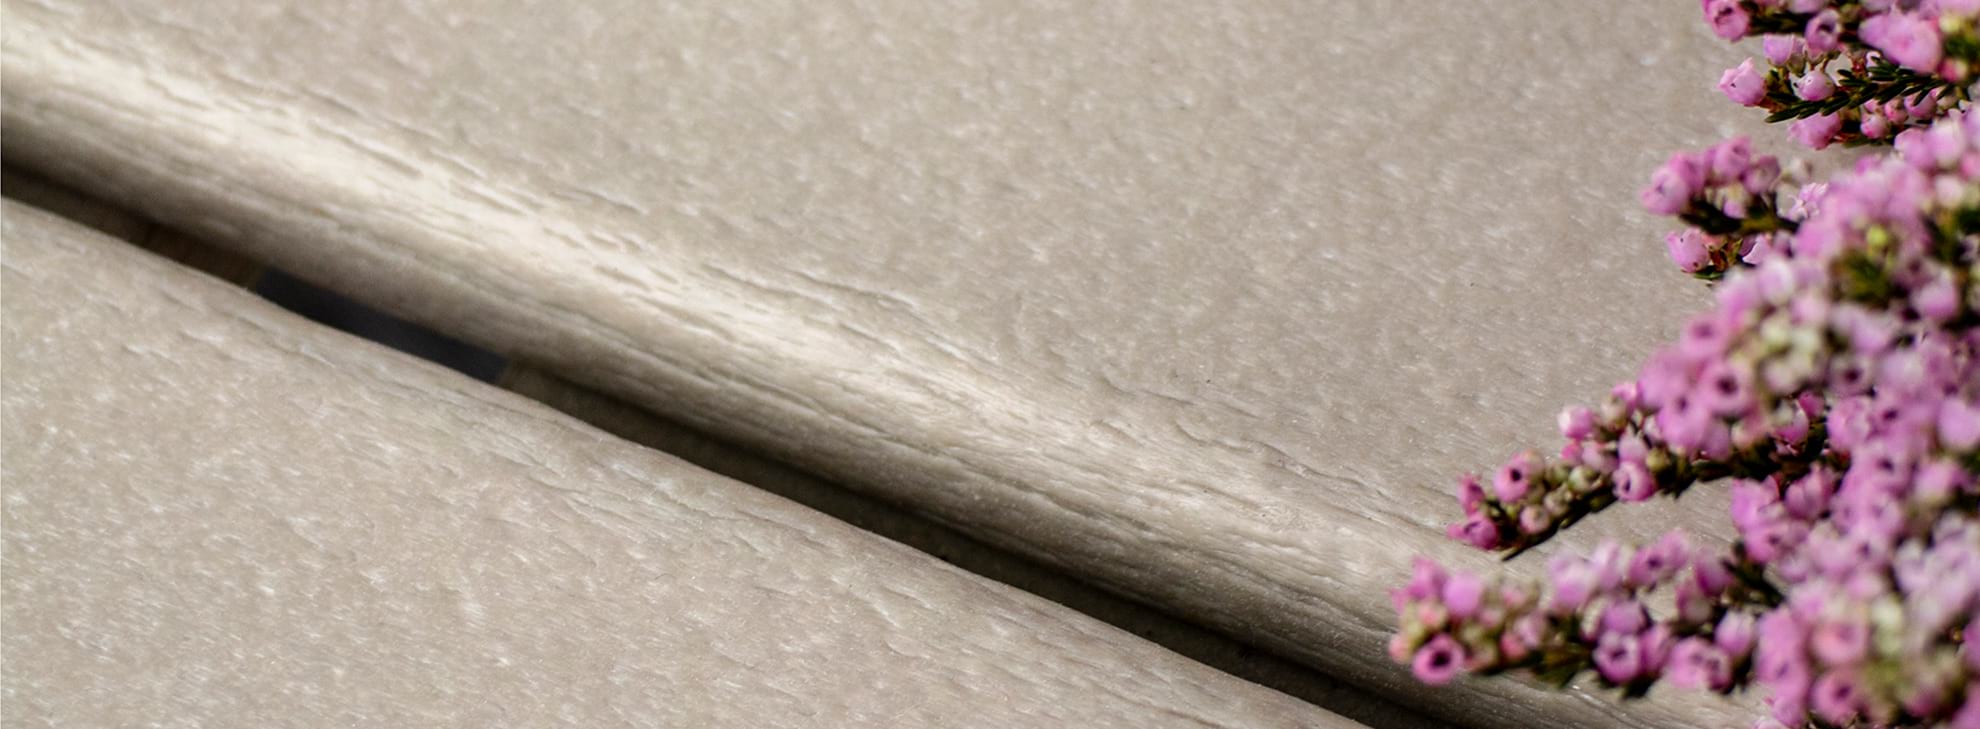 Closeup of POLYWOOD classic finish lumber in Sand